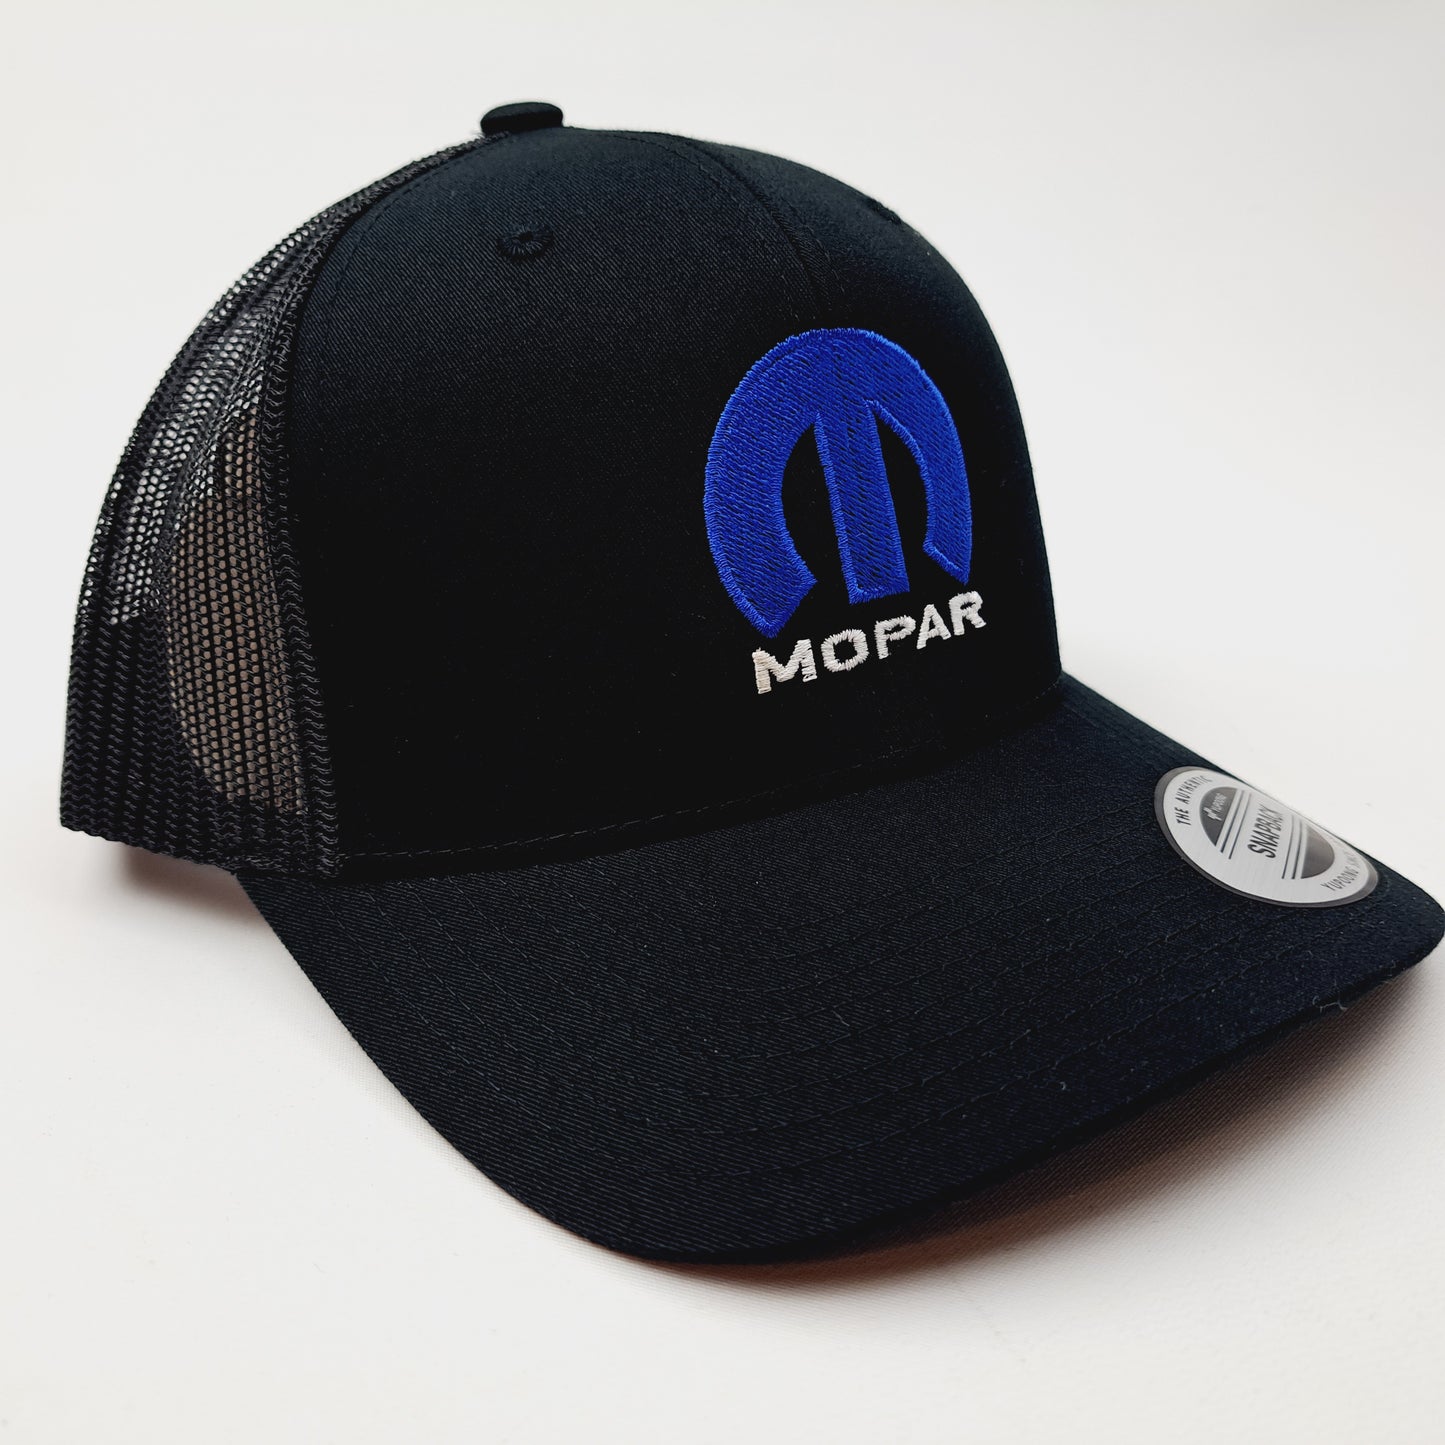 Mopar Curved Bill Low Profile Trucker Mesh Snapback Cap Hat Black